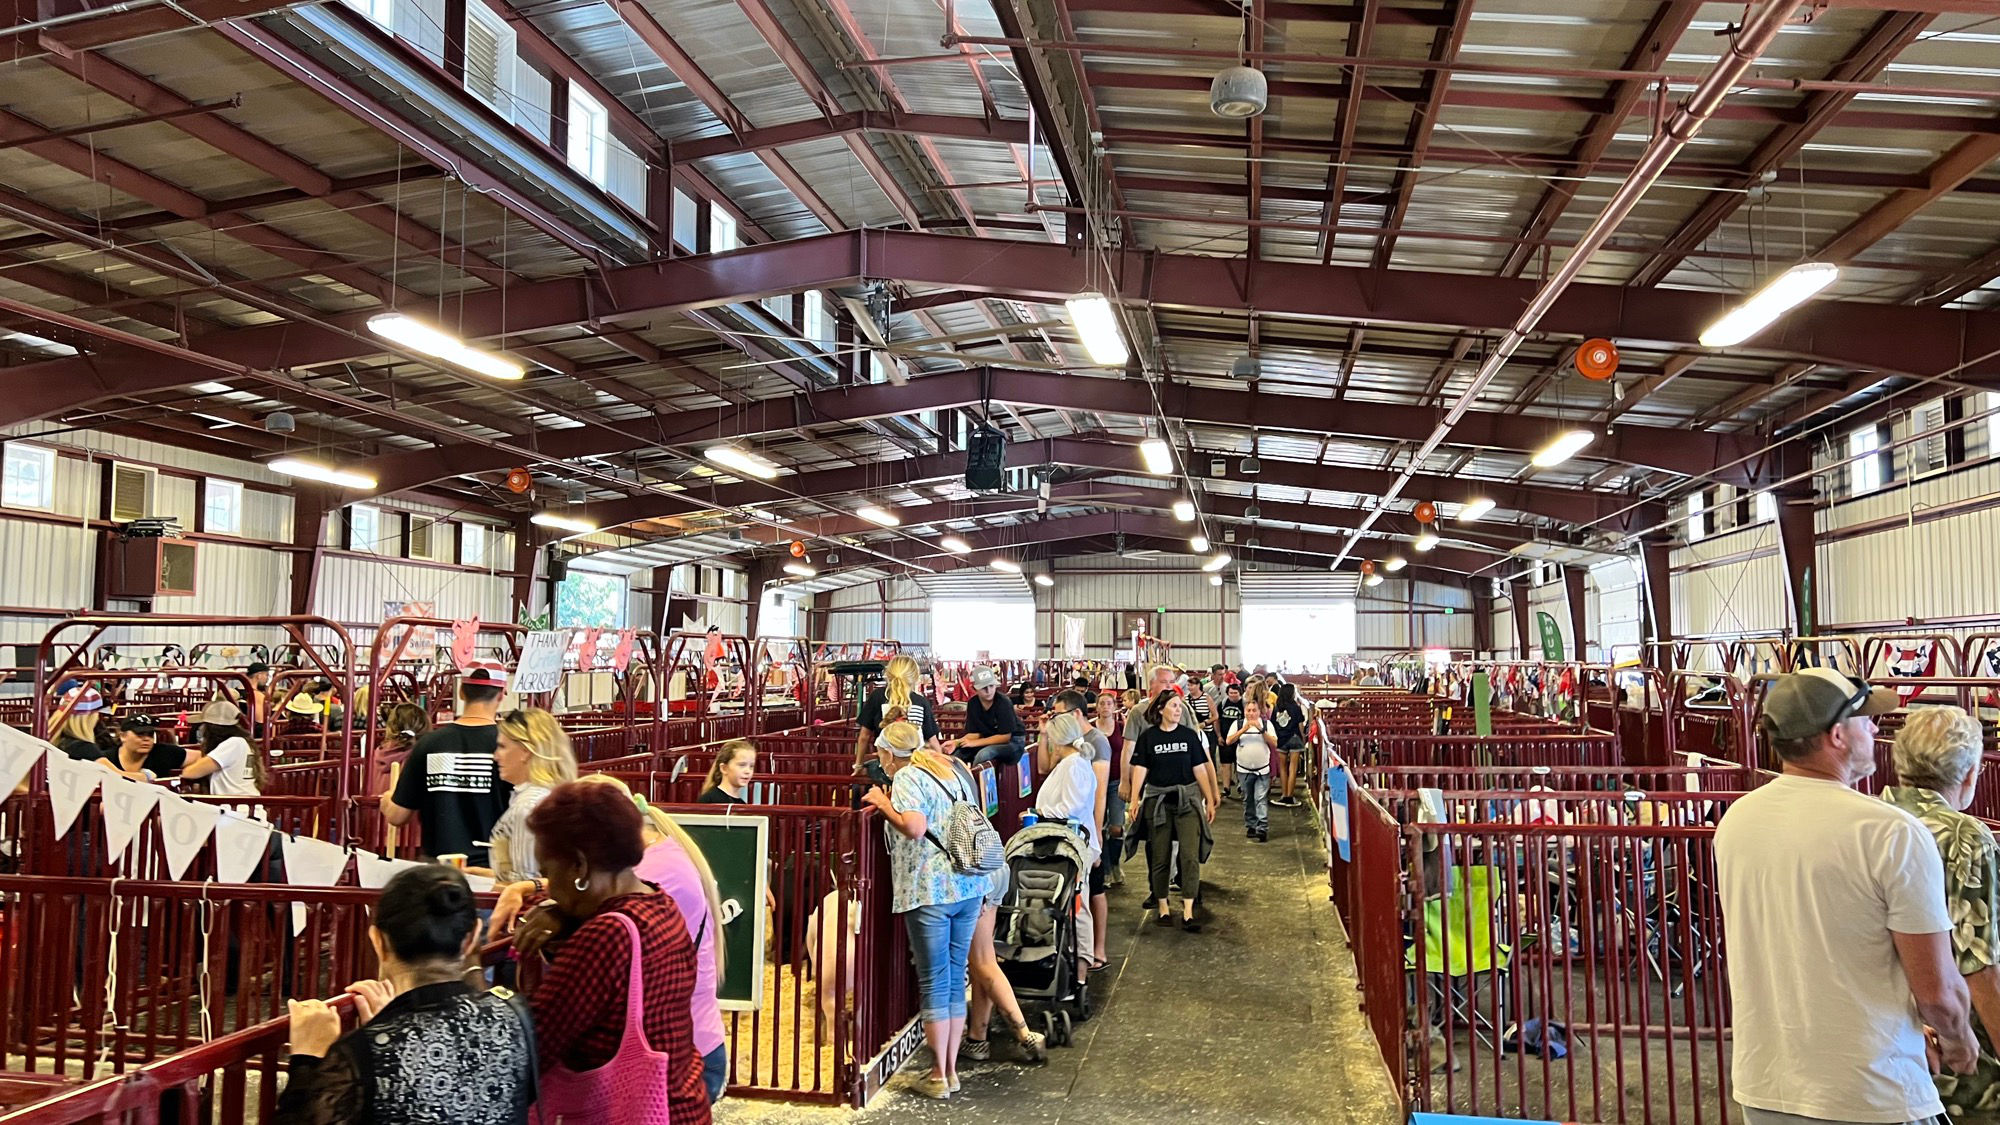 Livestock Inside Pavilion